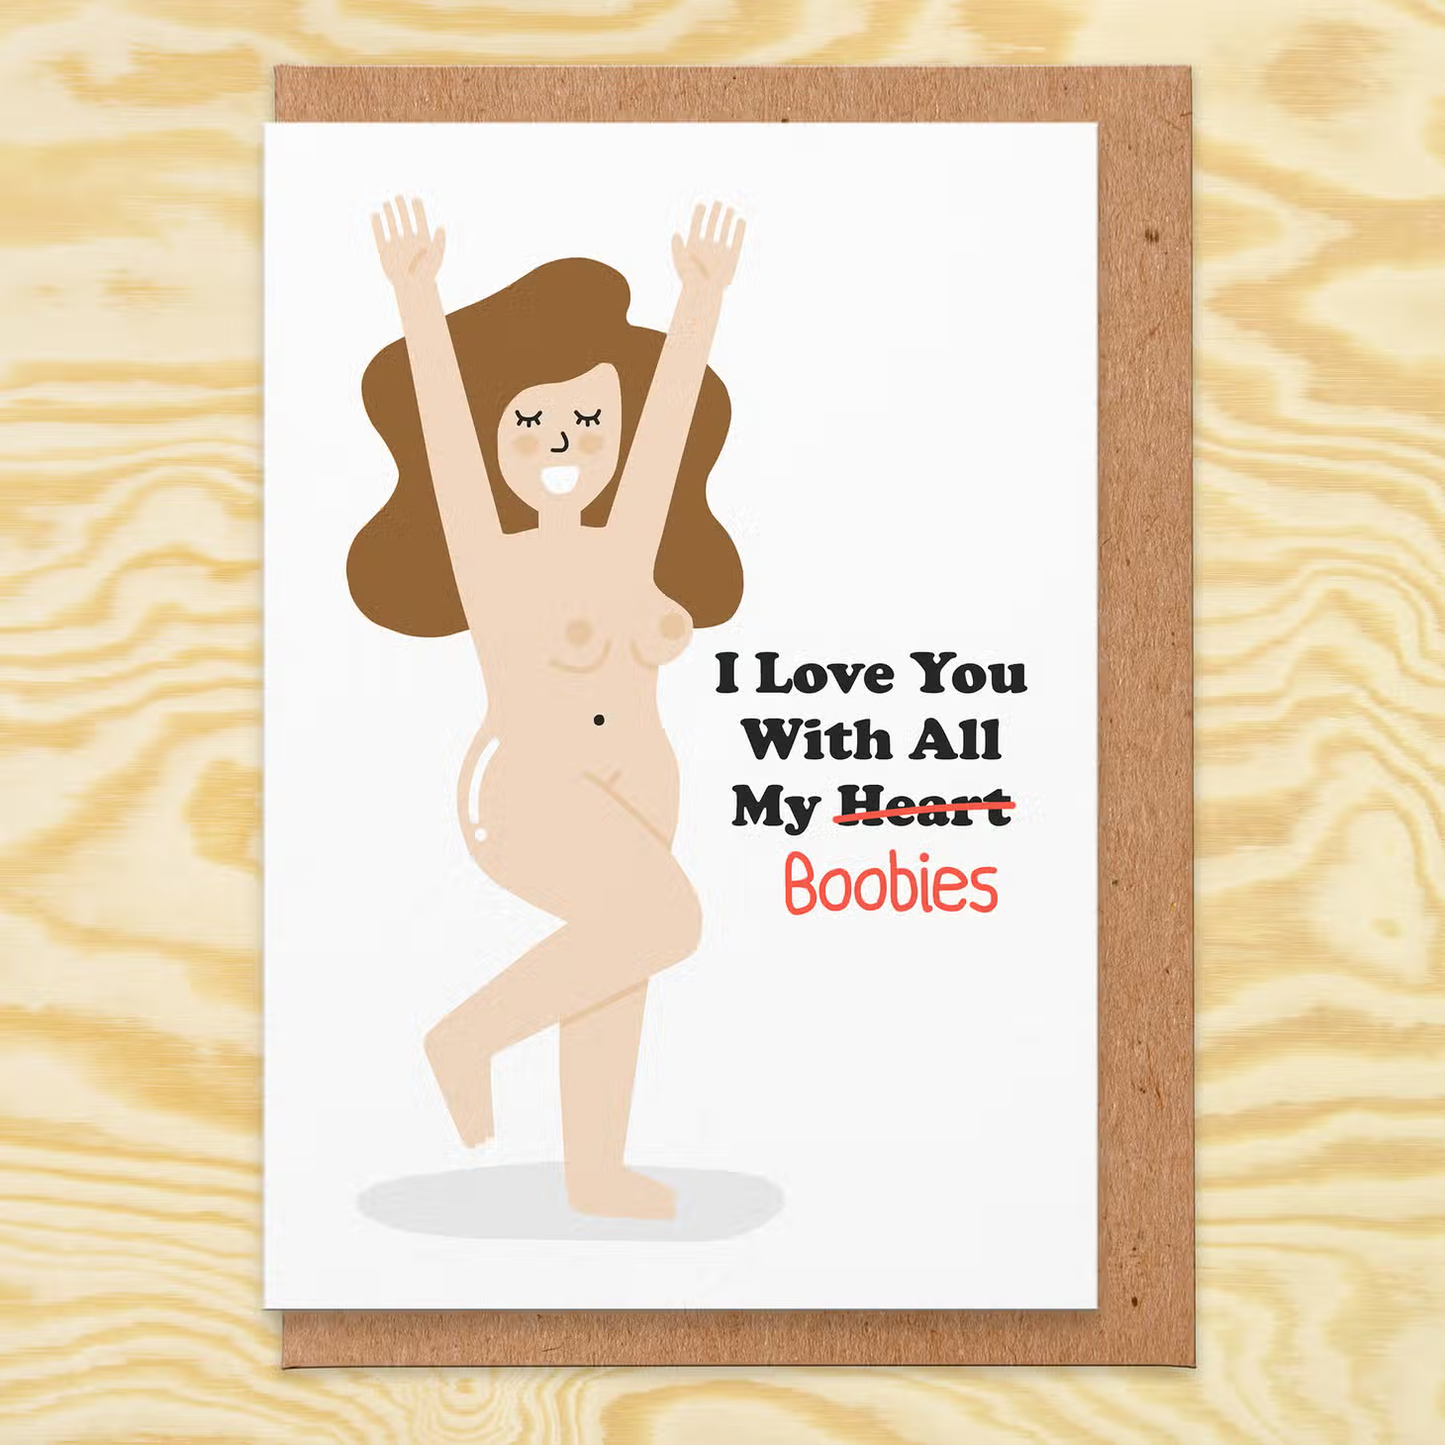 All My Boobies Greeting Card